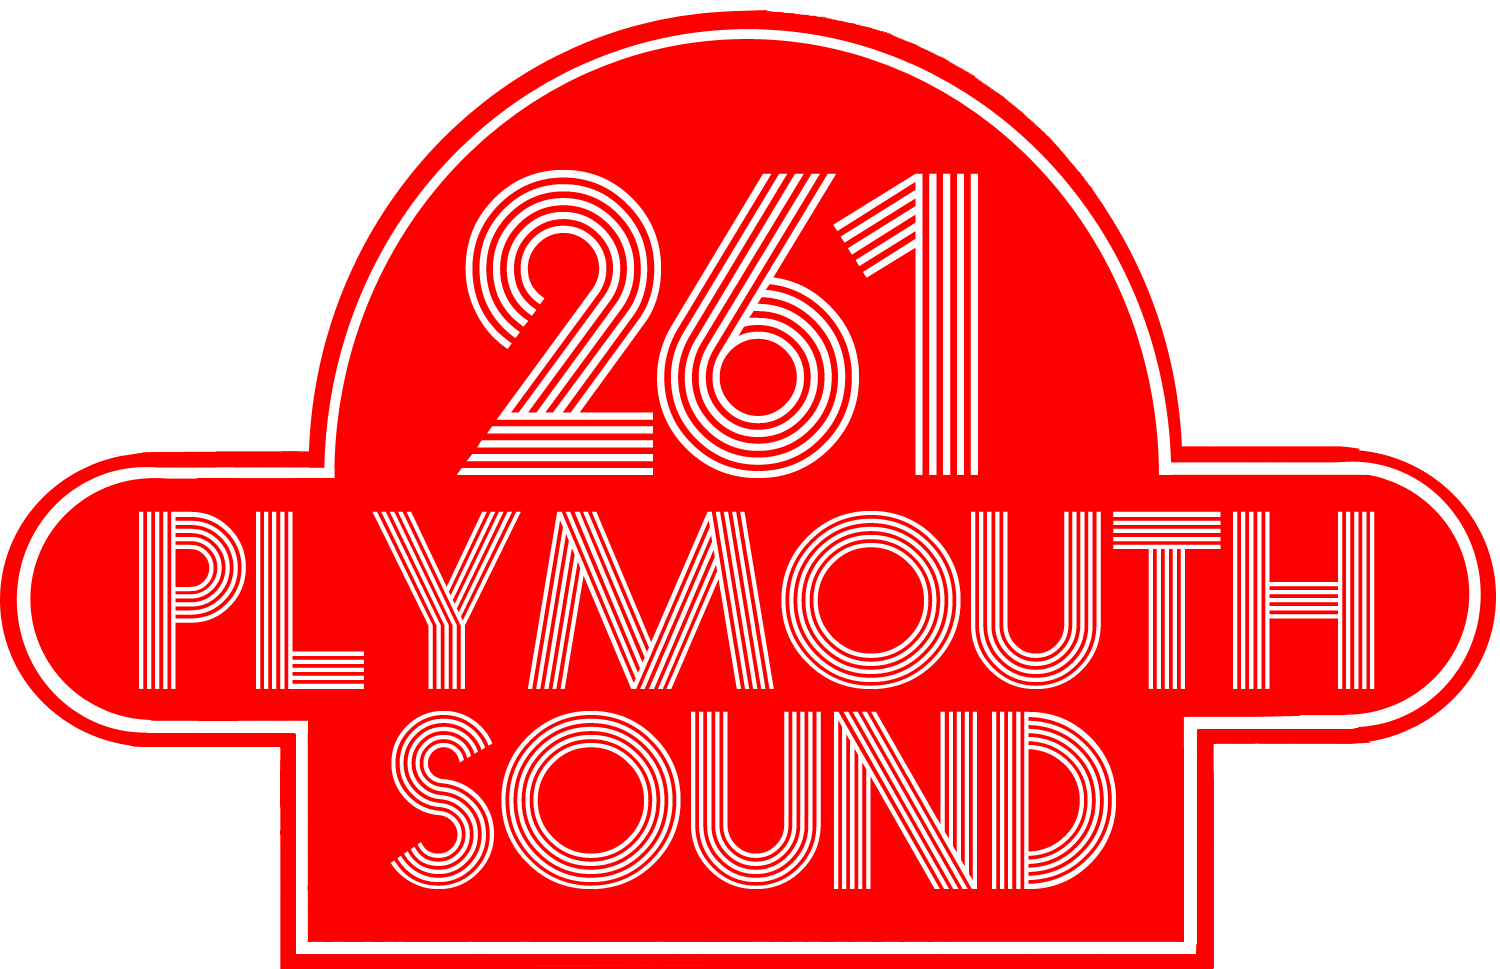 Plymouth Heart Logo - Heart South West | Logopedia | FANDOM powered by Wikia